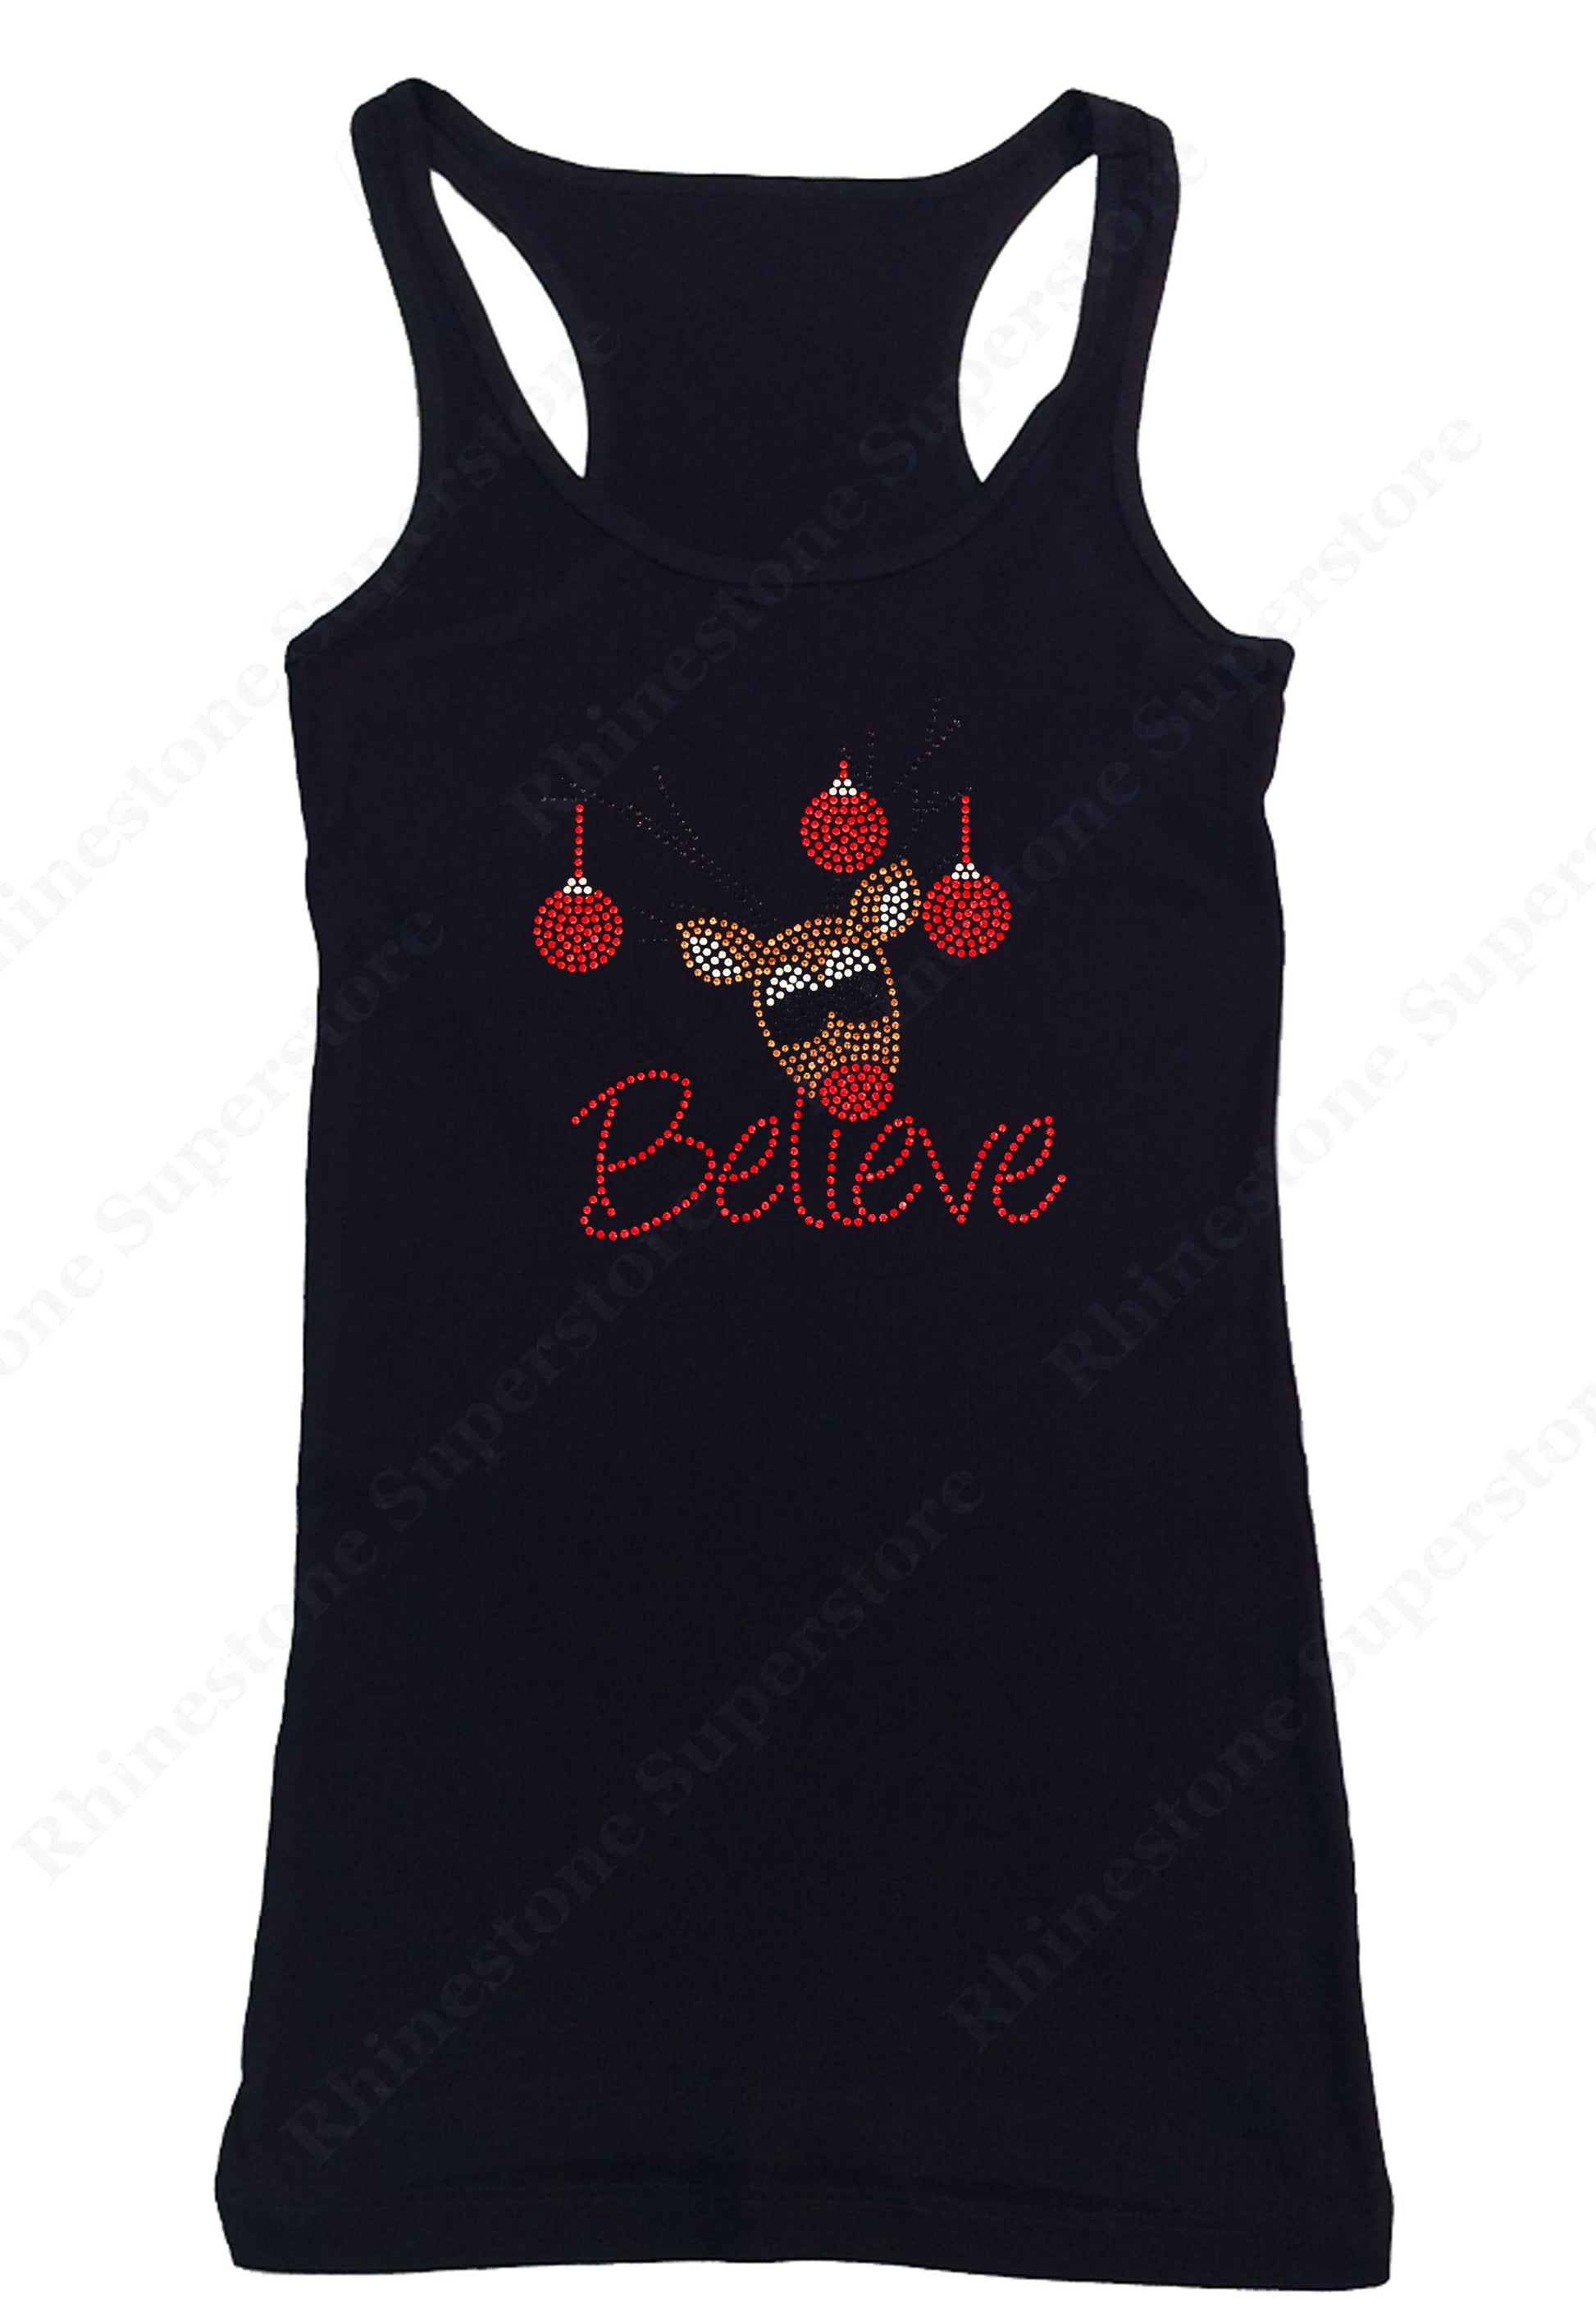 Womens T-shirt with Believe Reindeer in Rhinestuds tank top